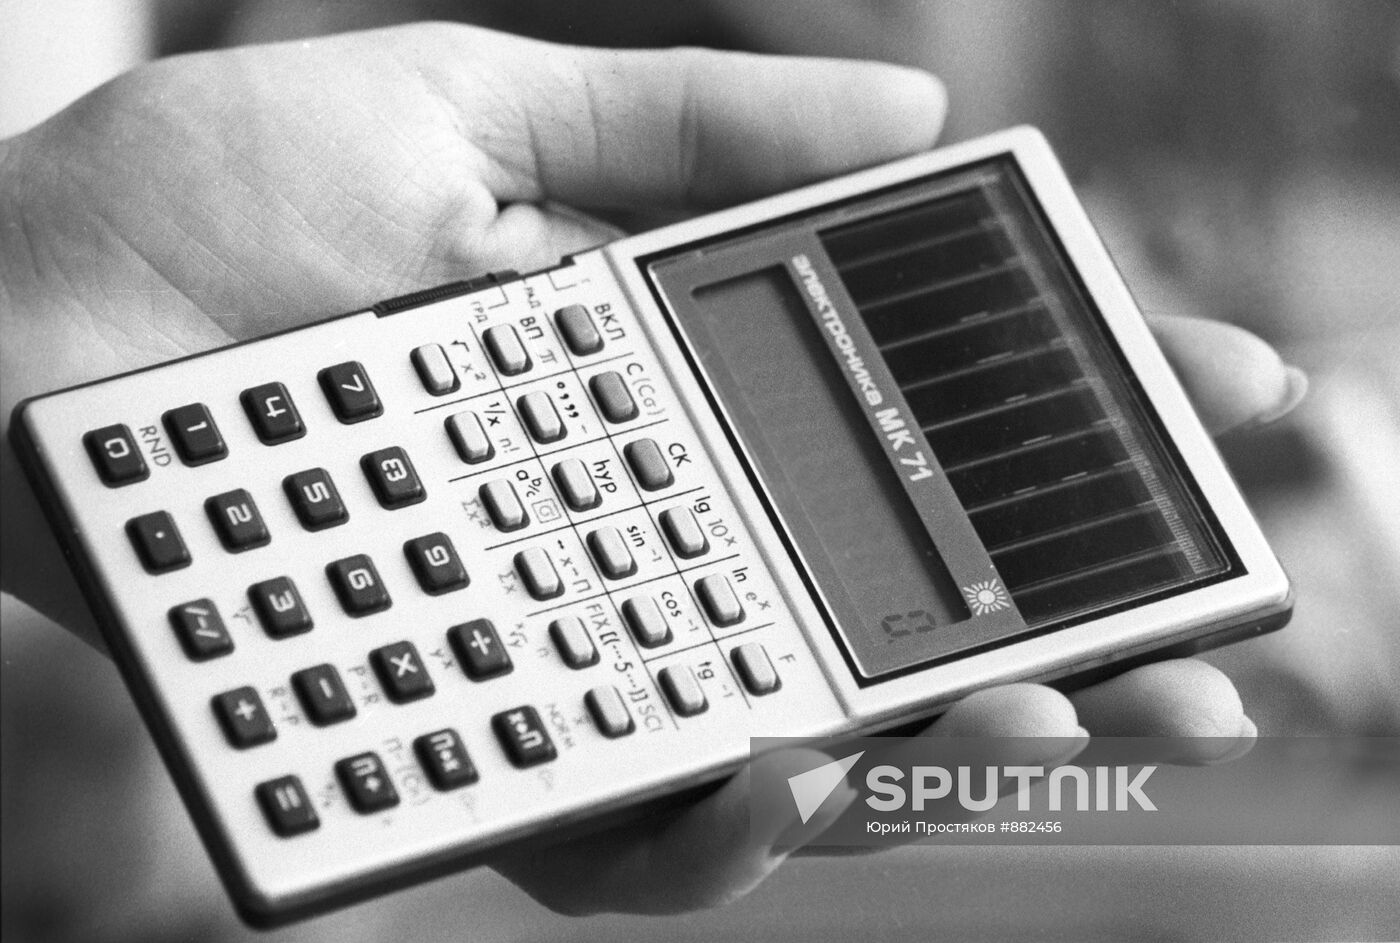 An Elektronika MK-71 calculator